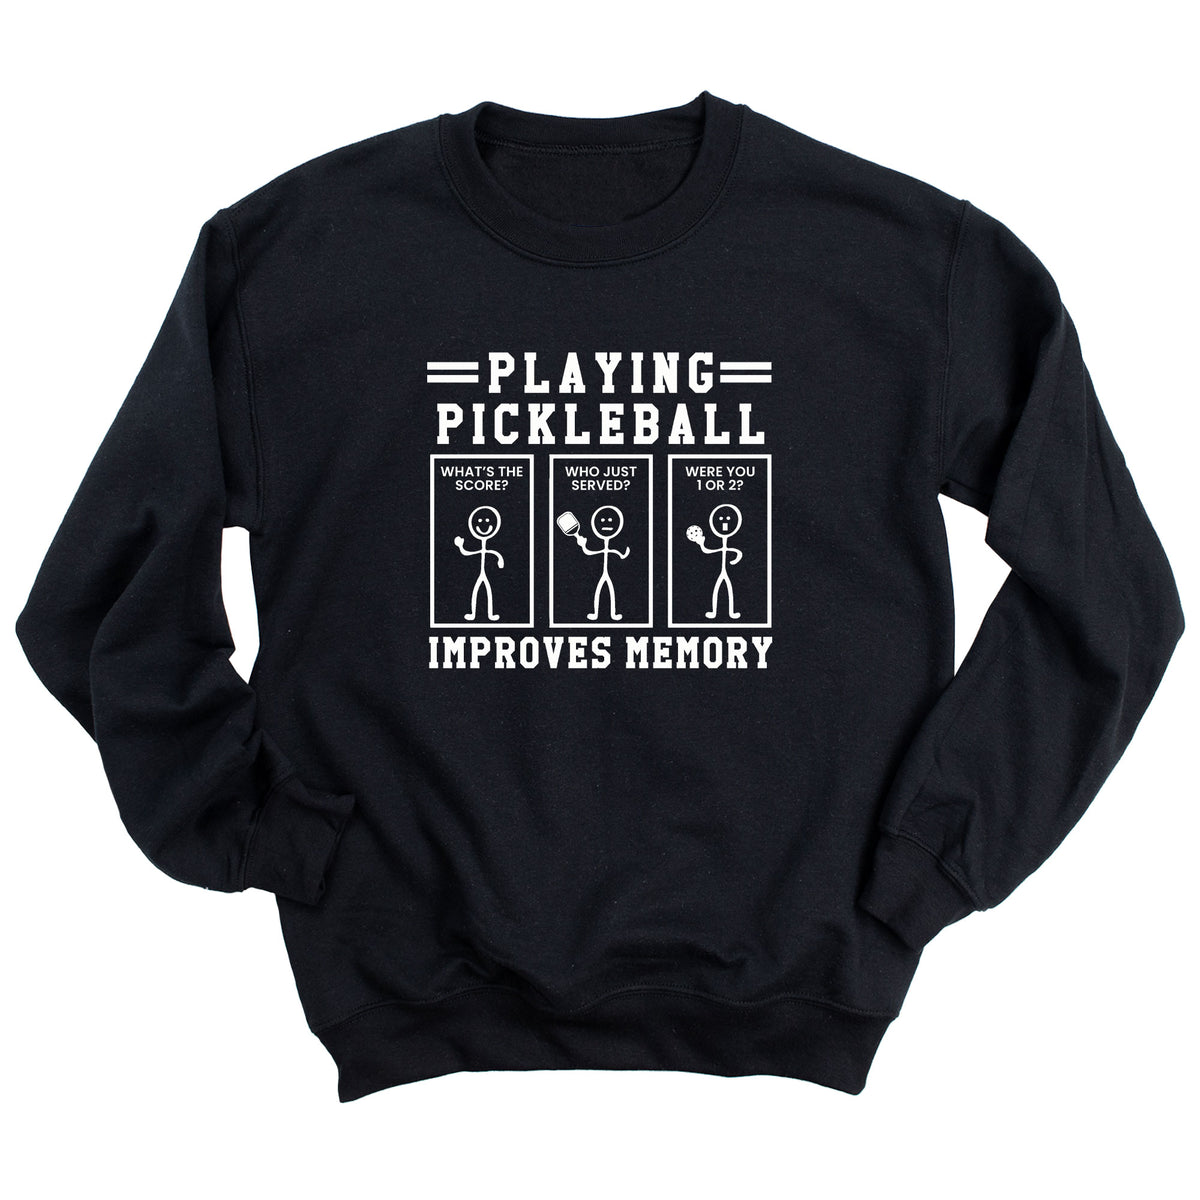 Playing Pickleball Improves Memory Sweatshirt